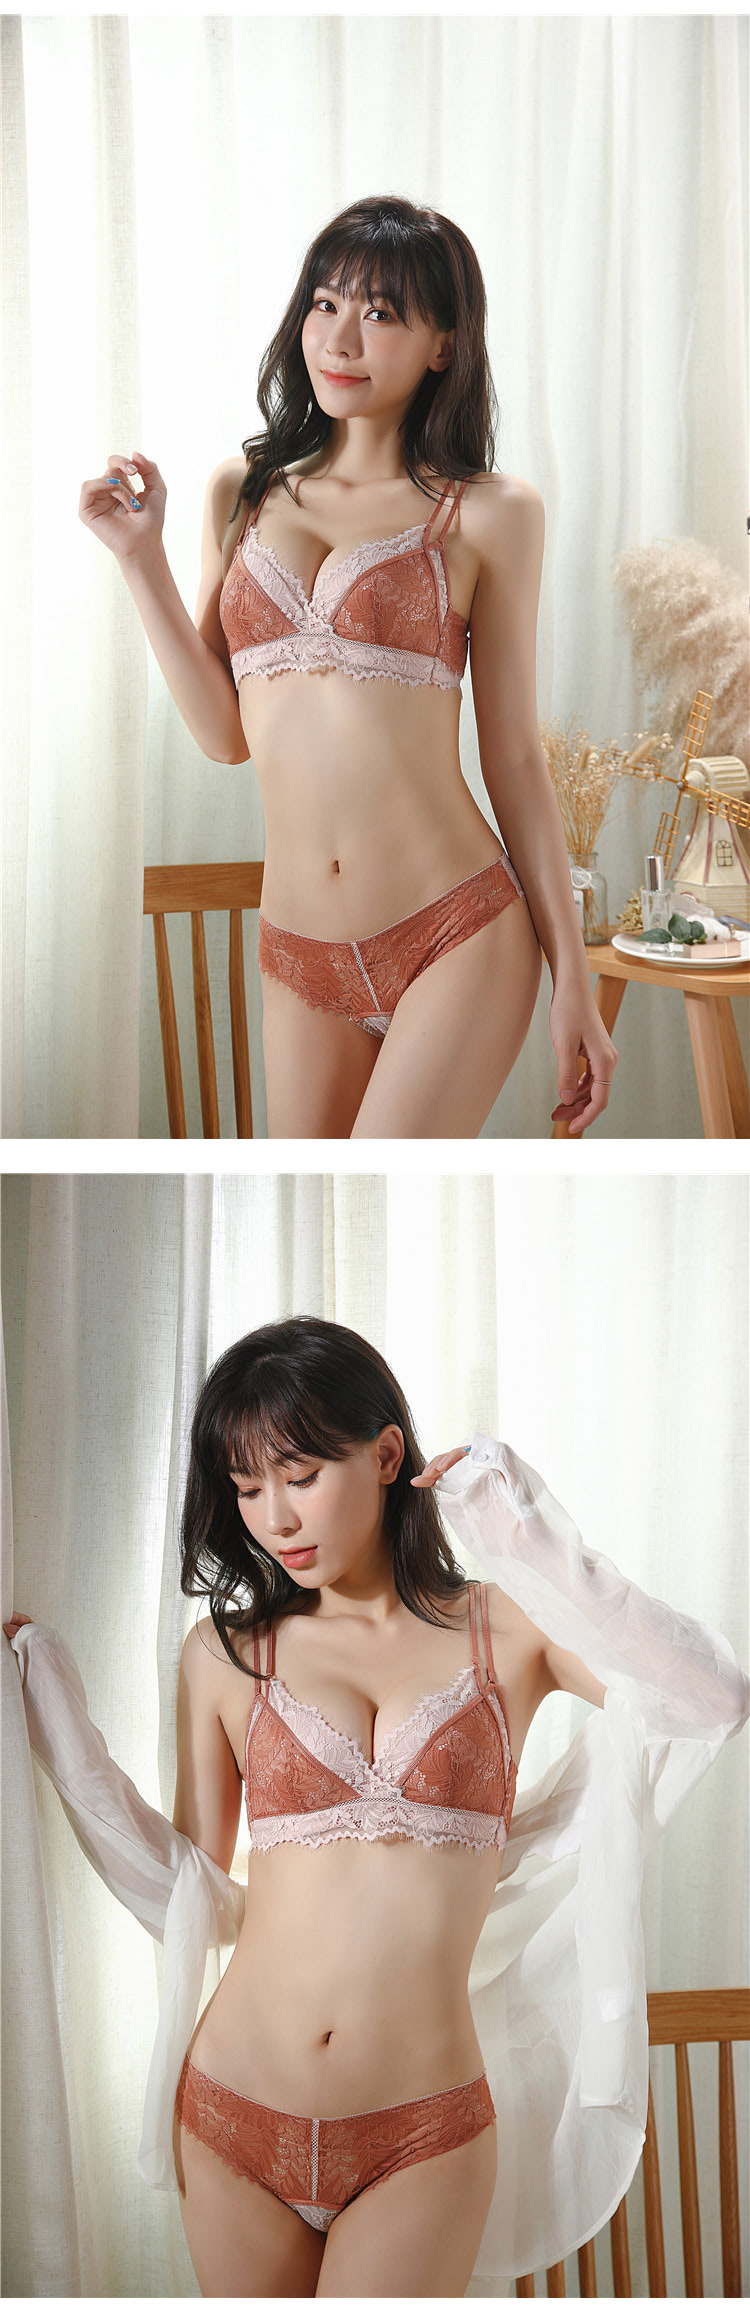 Sexy-Beautiful-Lingerie-Set-Lace-Underwear-Bra-and-Panty22.jpg